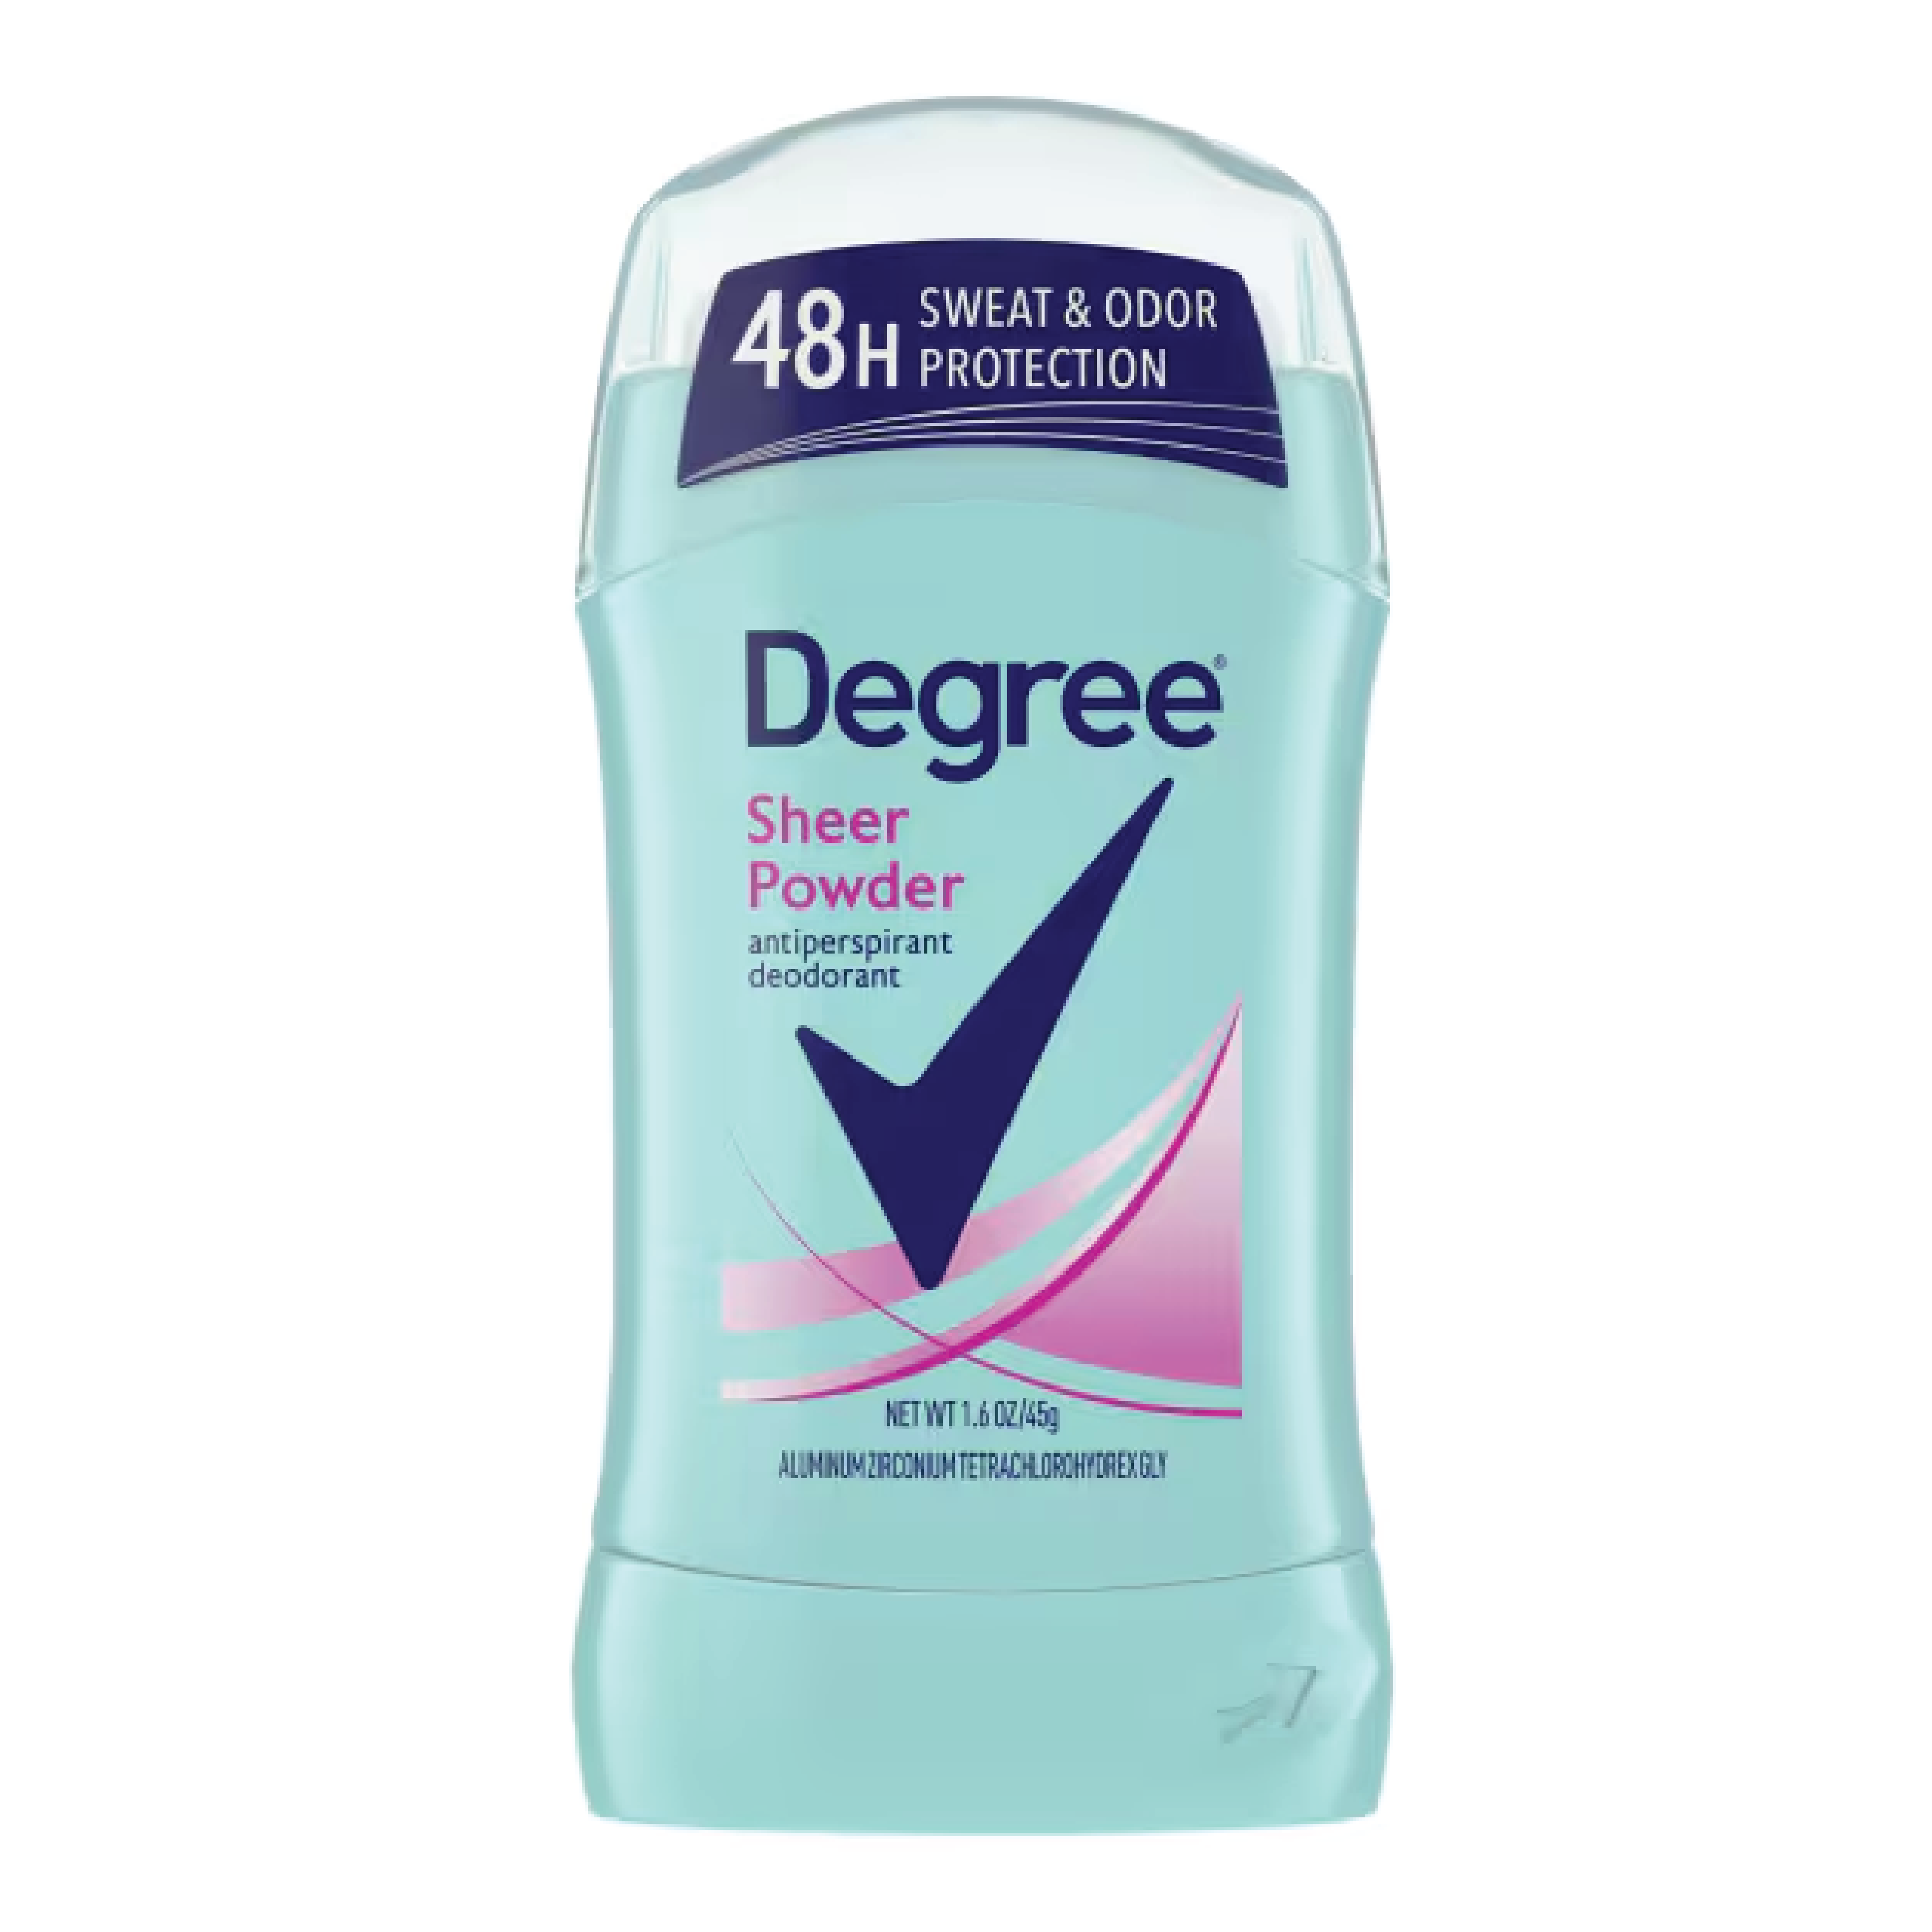 Degree Sheer Powder Deodorant 1.6oz